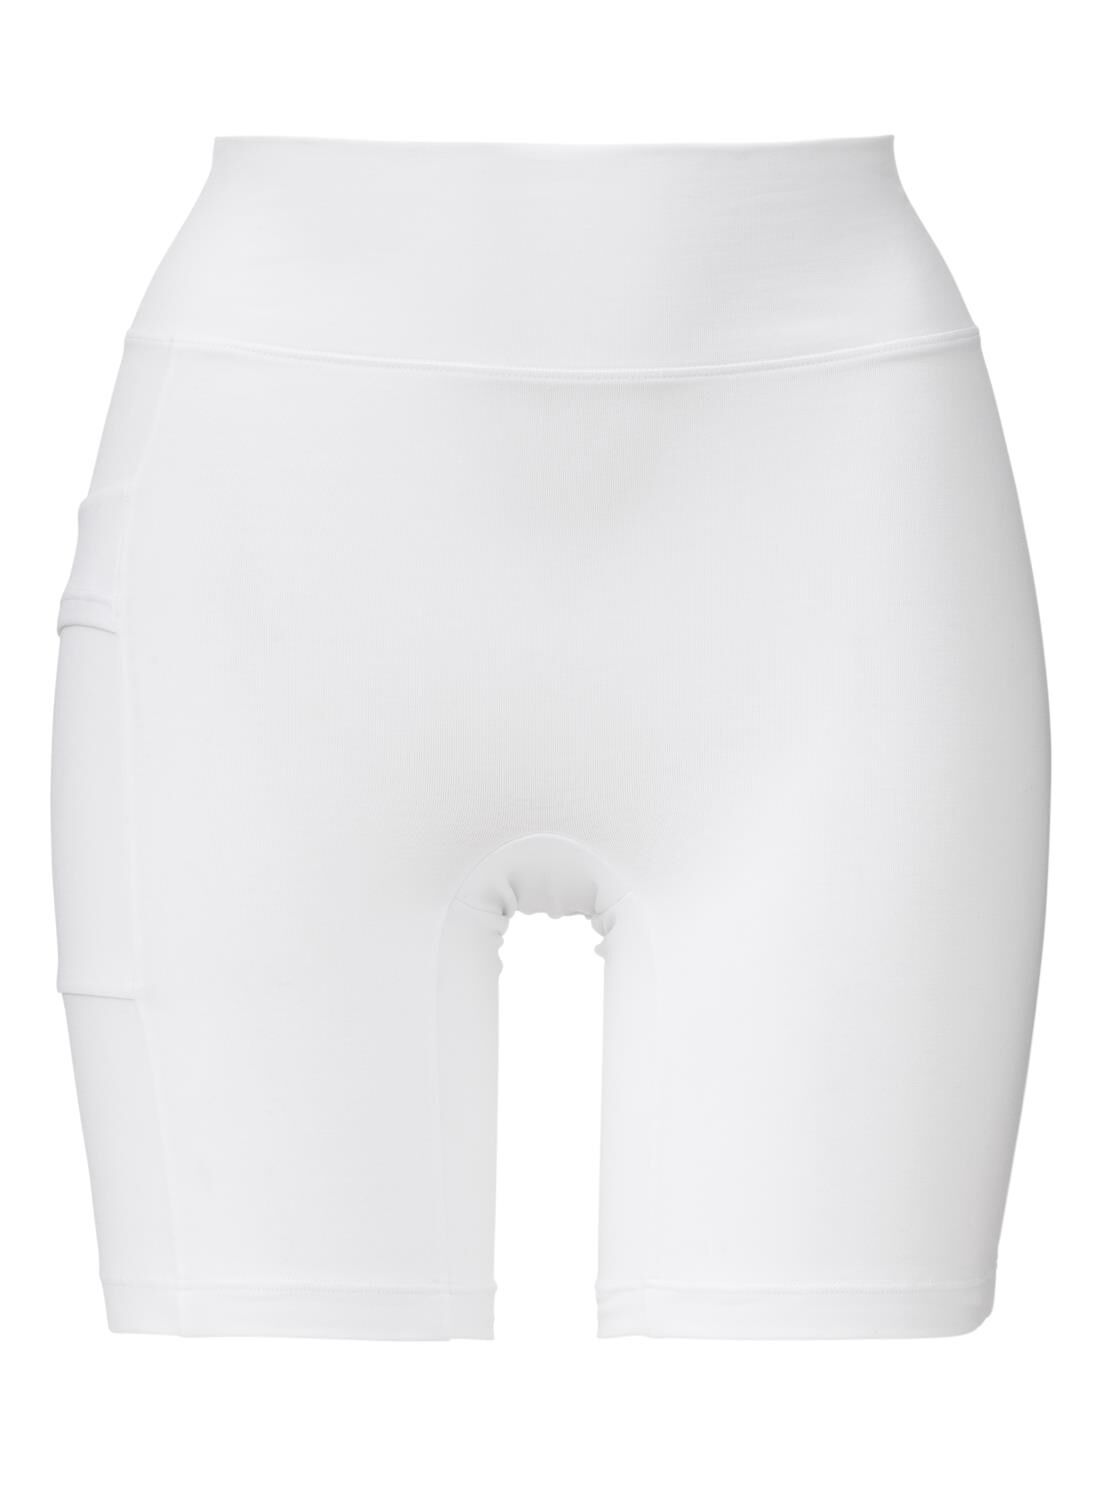 white cotton cycling shorts